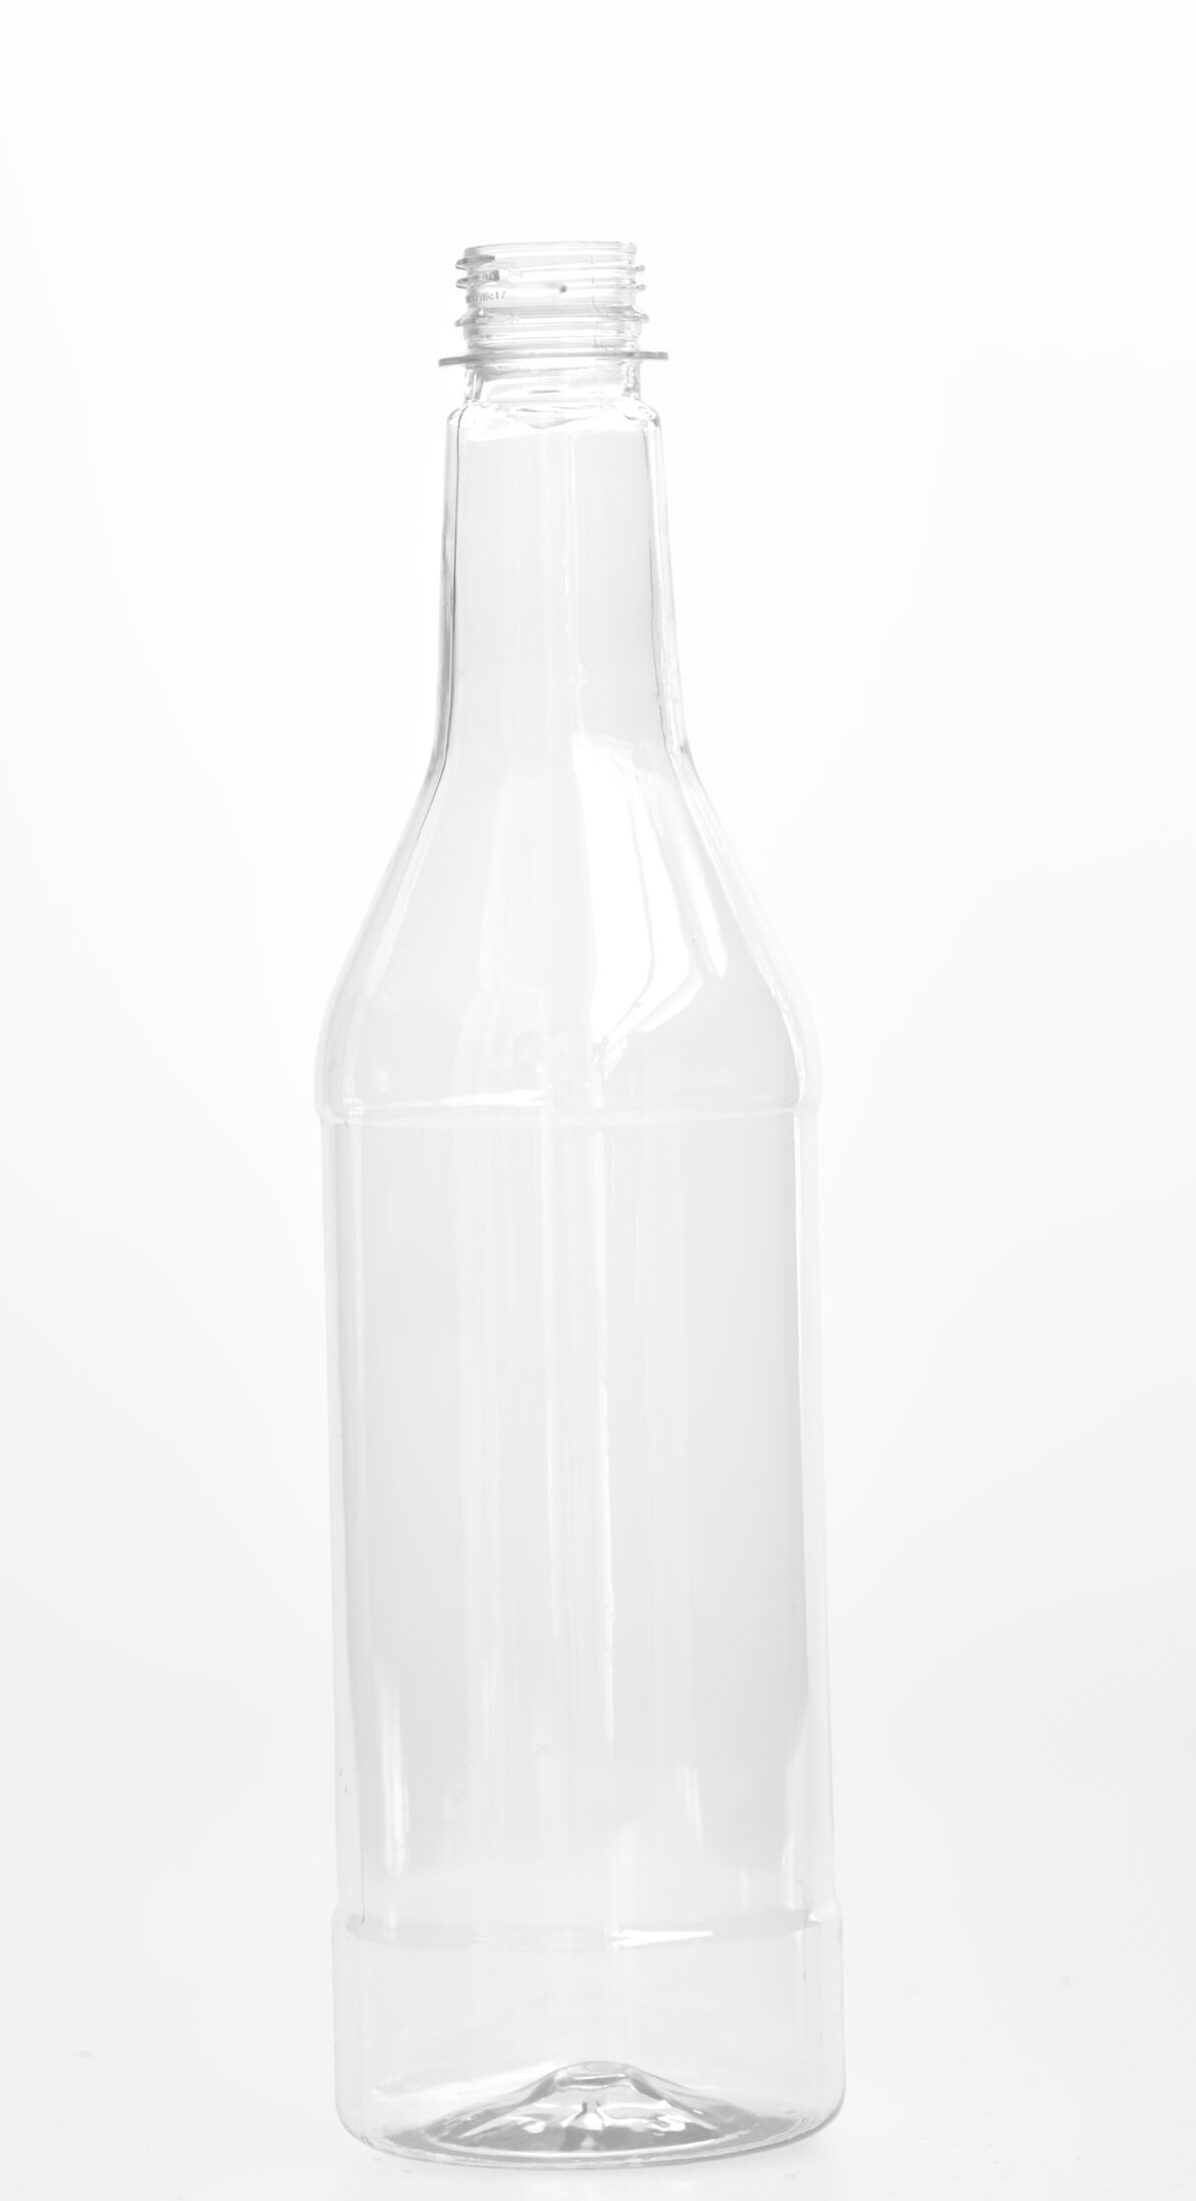 Botella de 750cc / 25.5oz / 0.75 ltr / 750ml main image